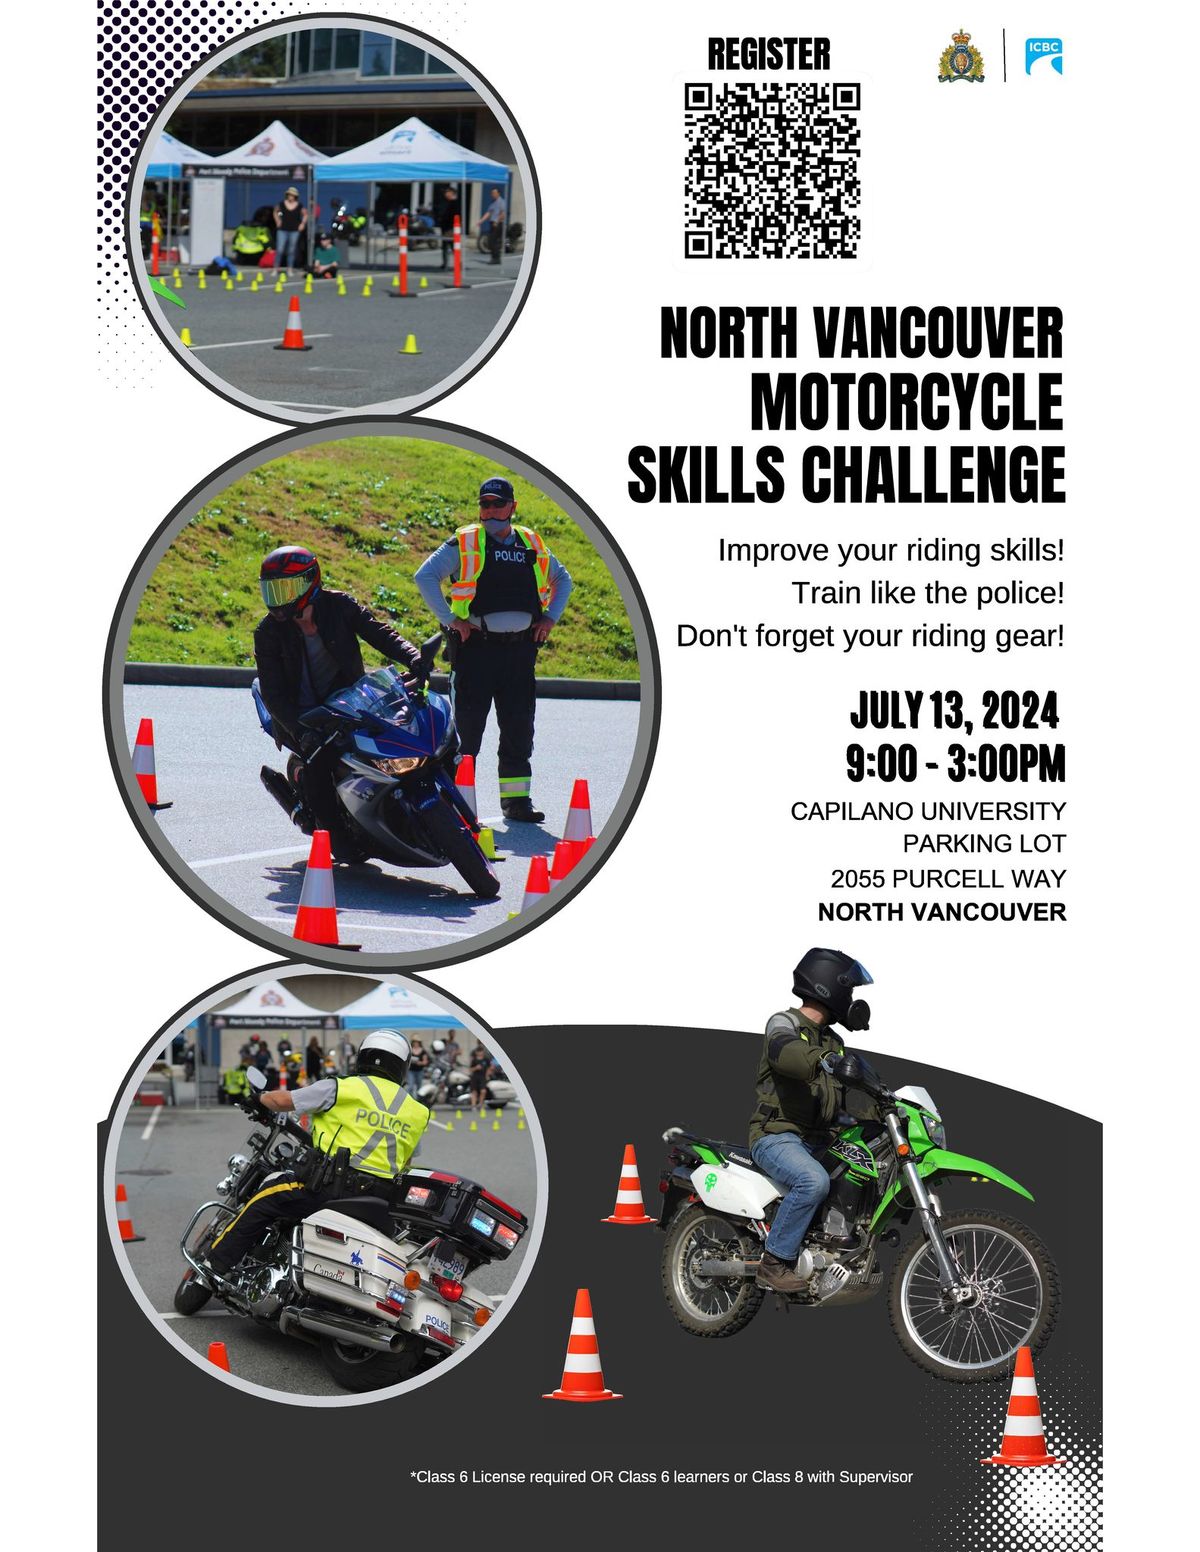 North Vancouver Motorcycle skills challenge